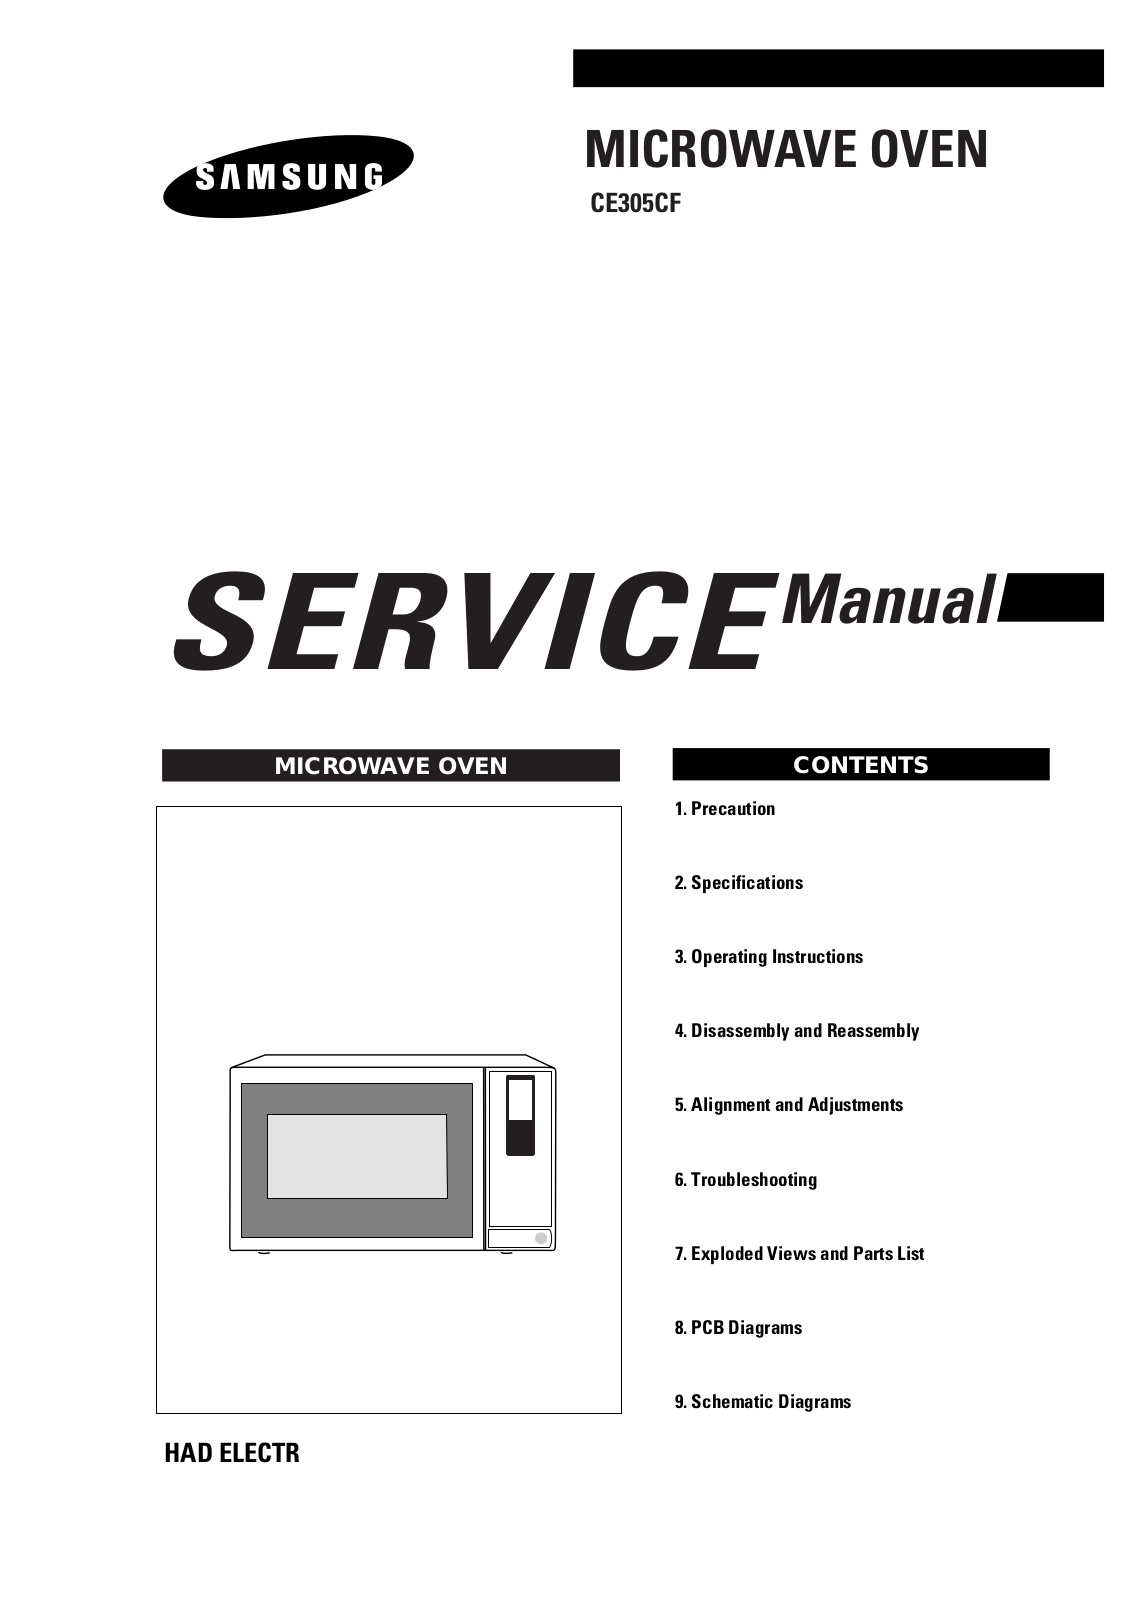 Samsung CE305 Service Manual